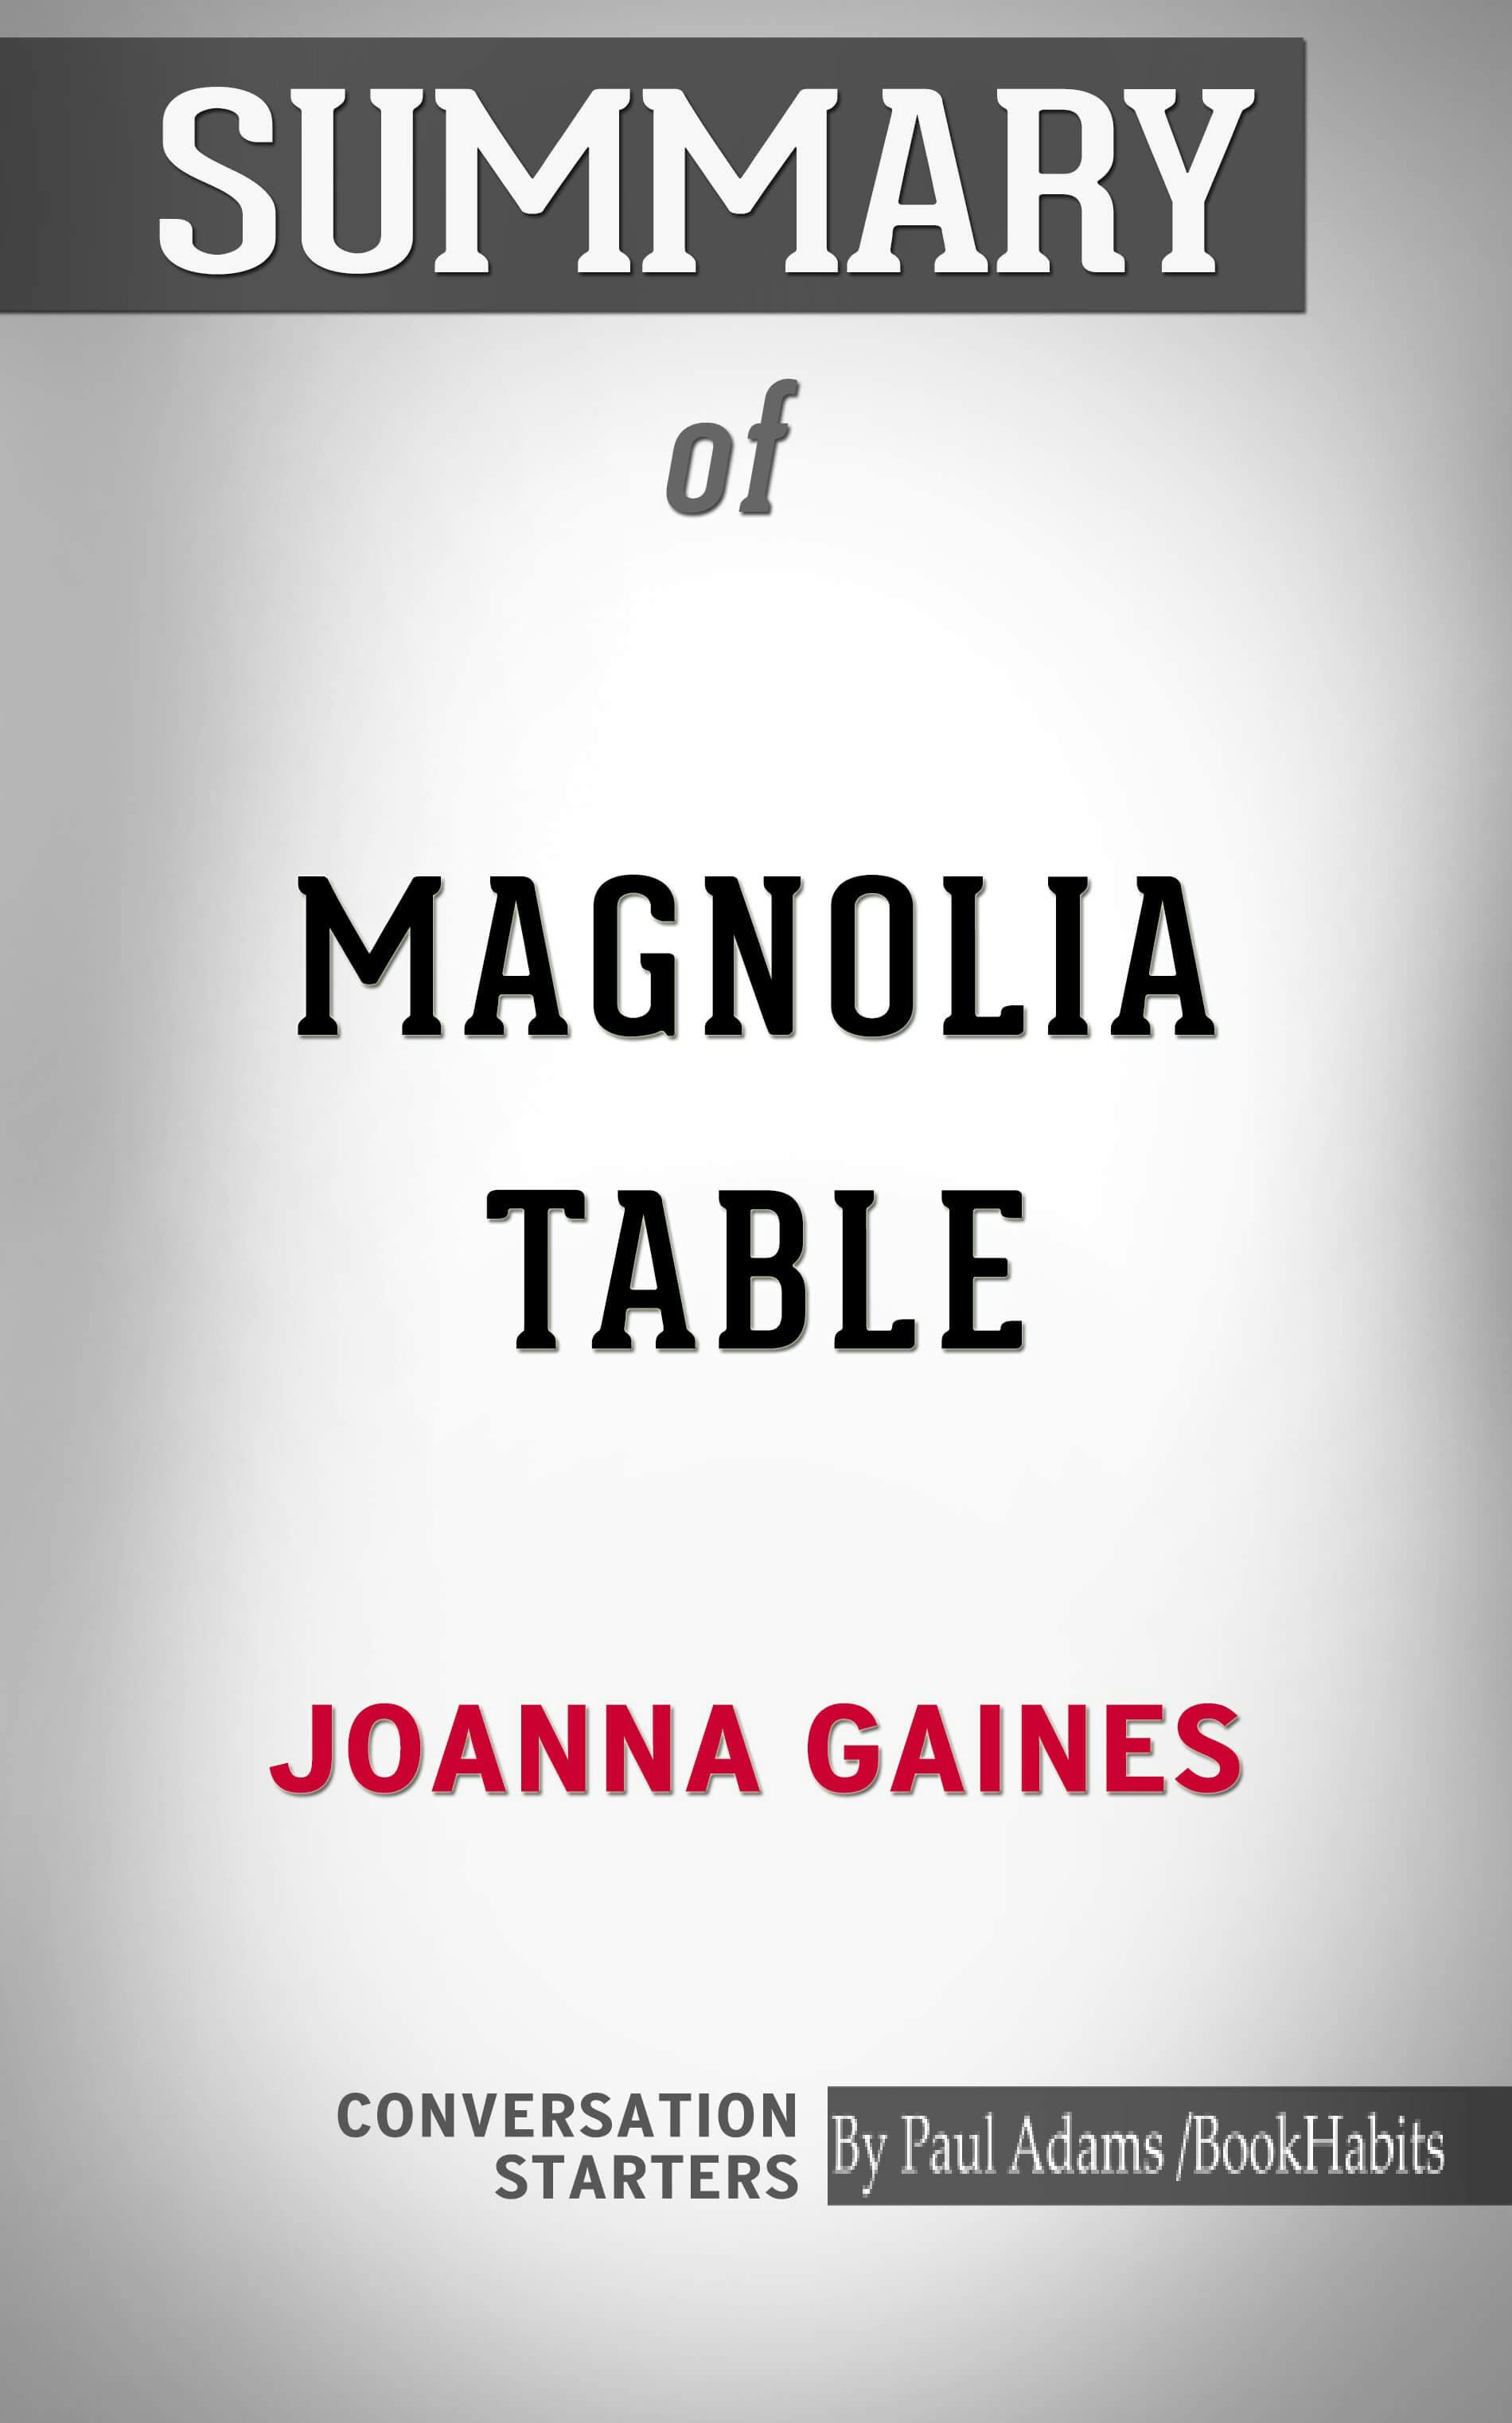 Summary of Magnolia Table - undefined